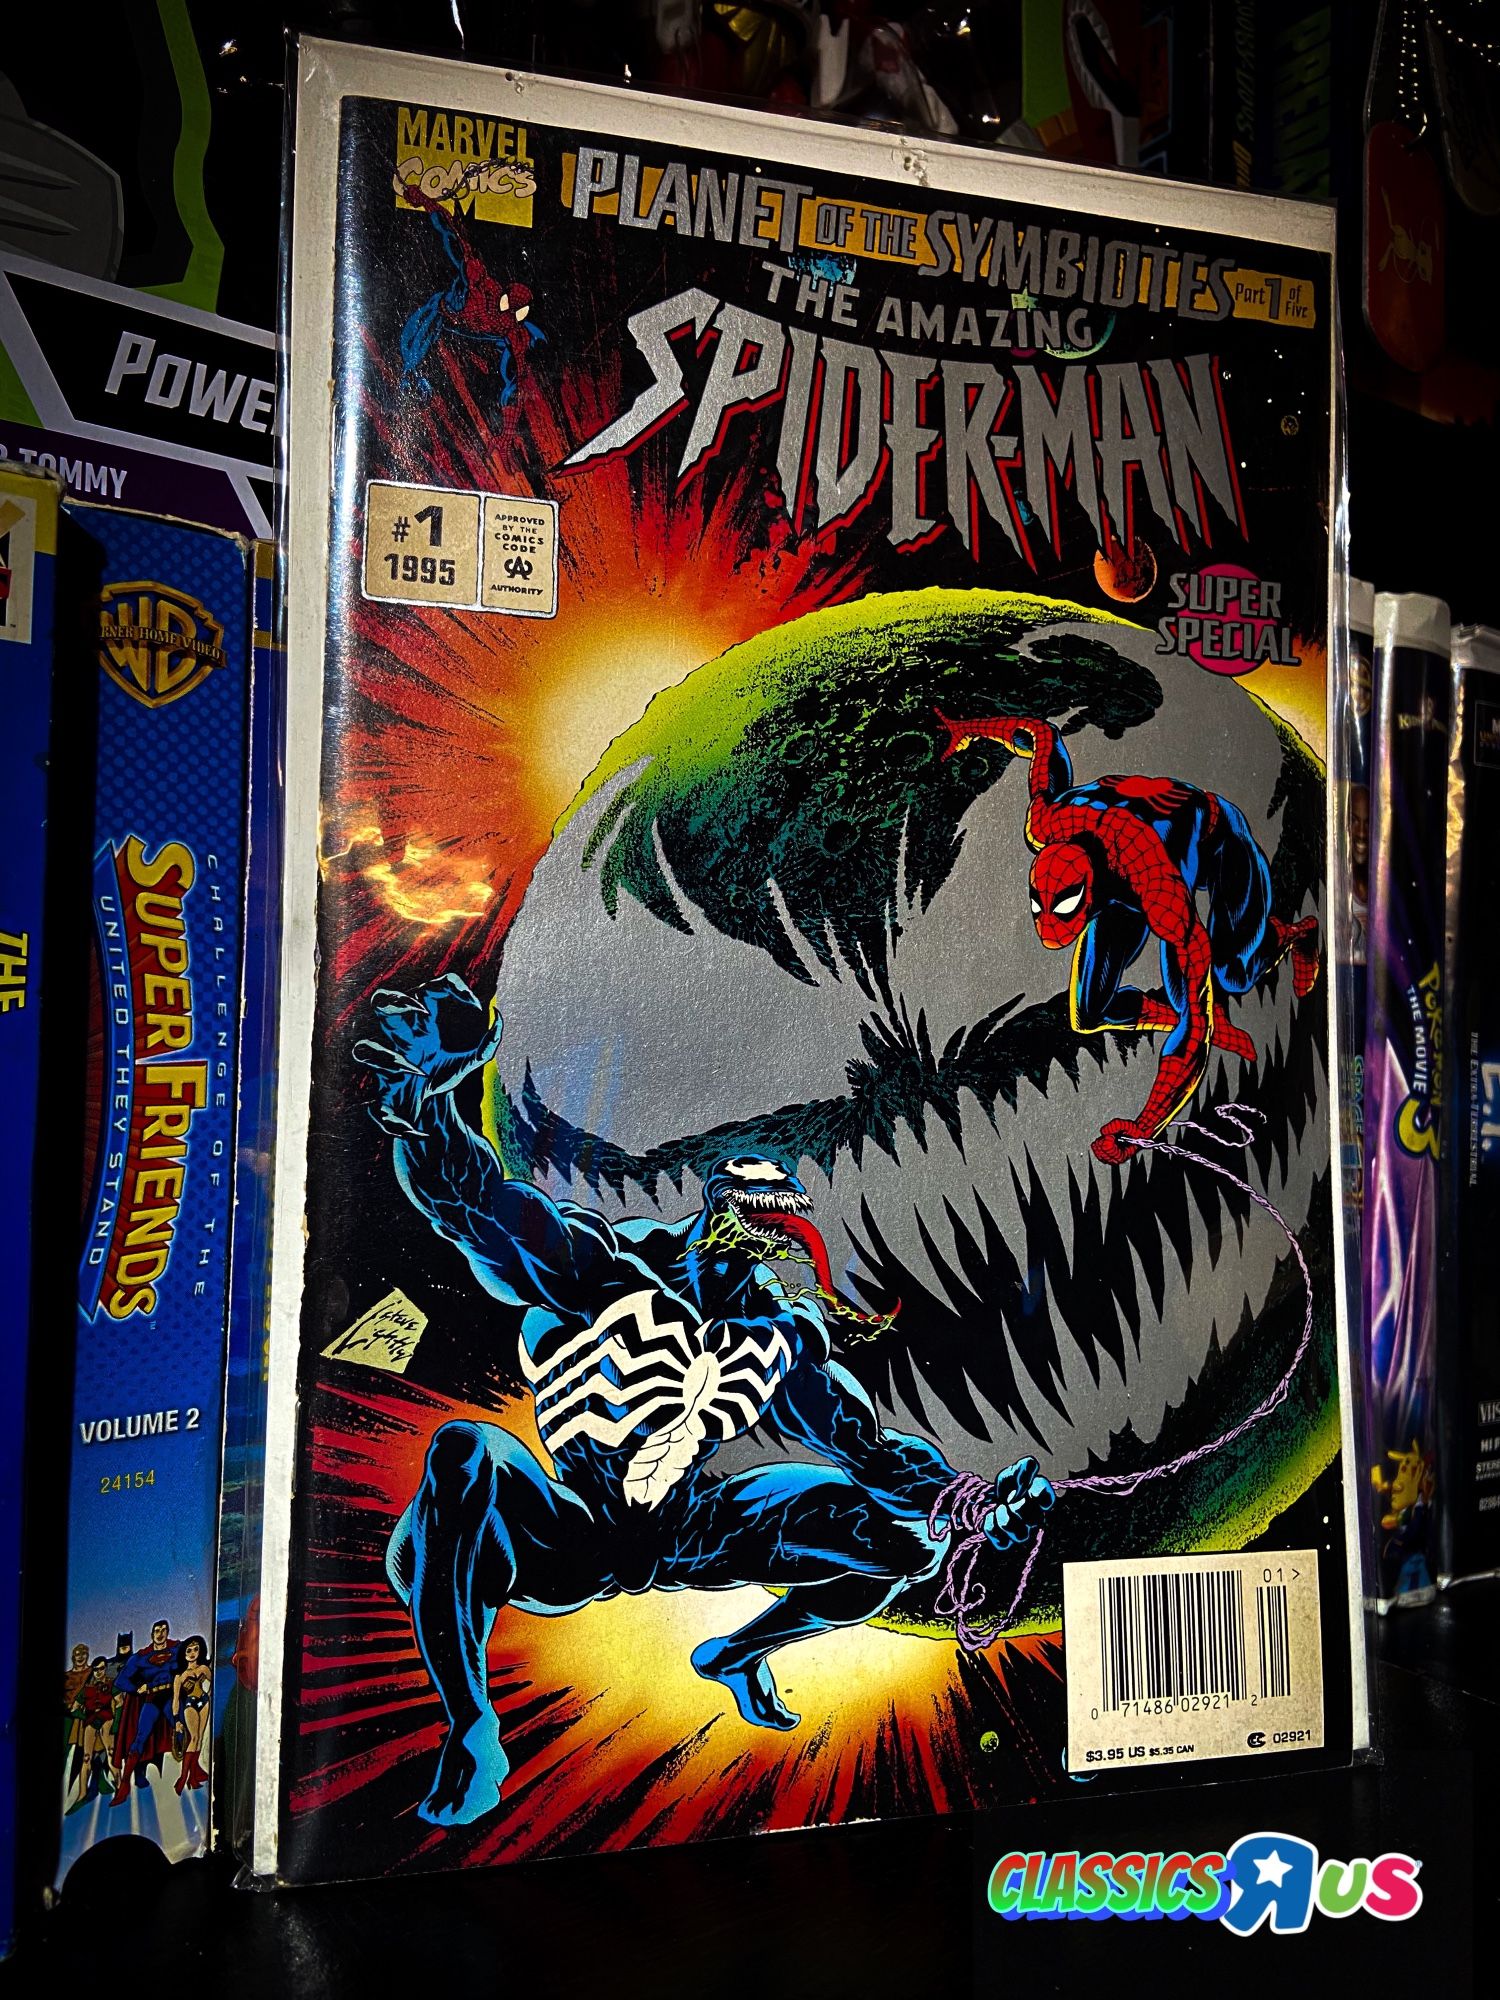 The Amazing Spider-Man Super Special #1 (Marvel Comics June 1995)